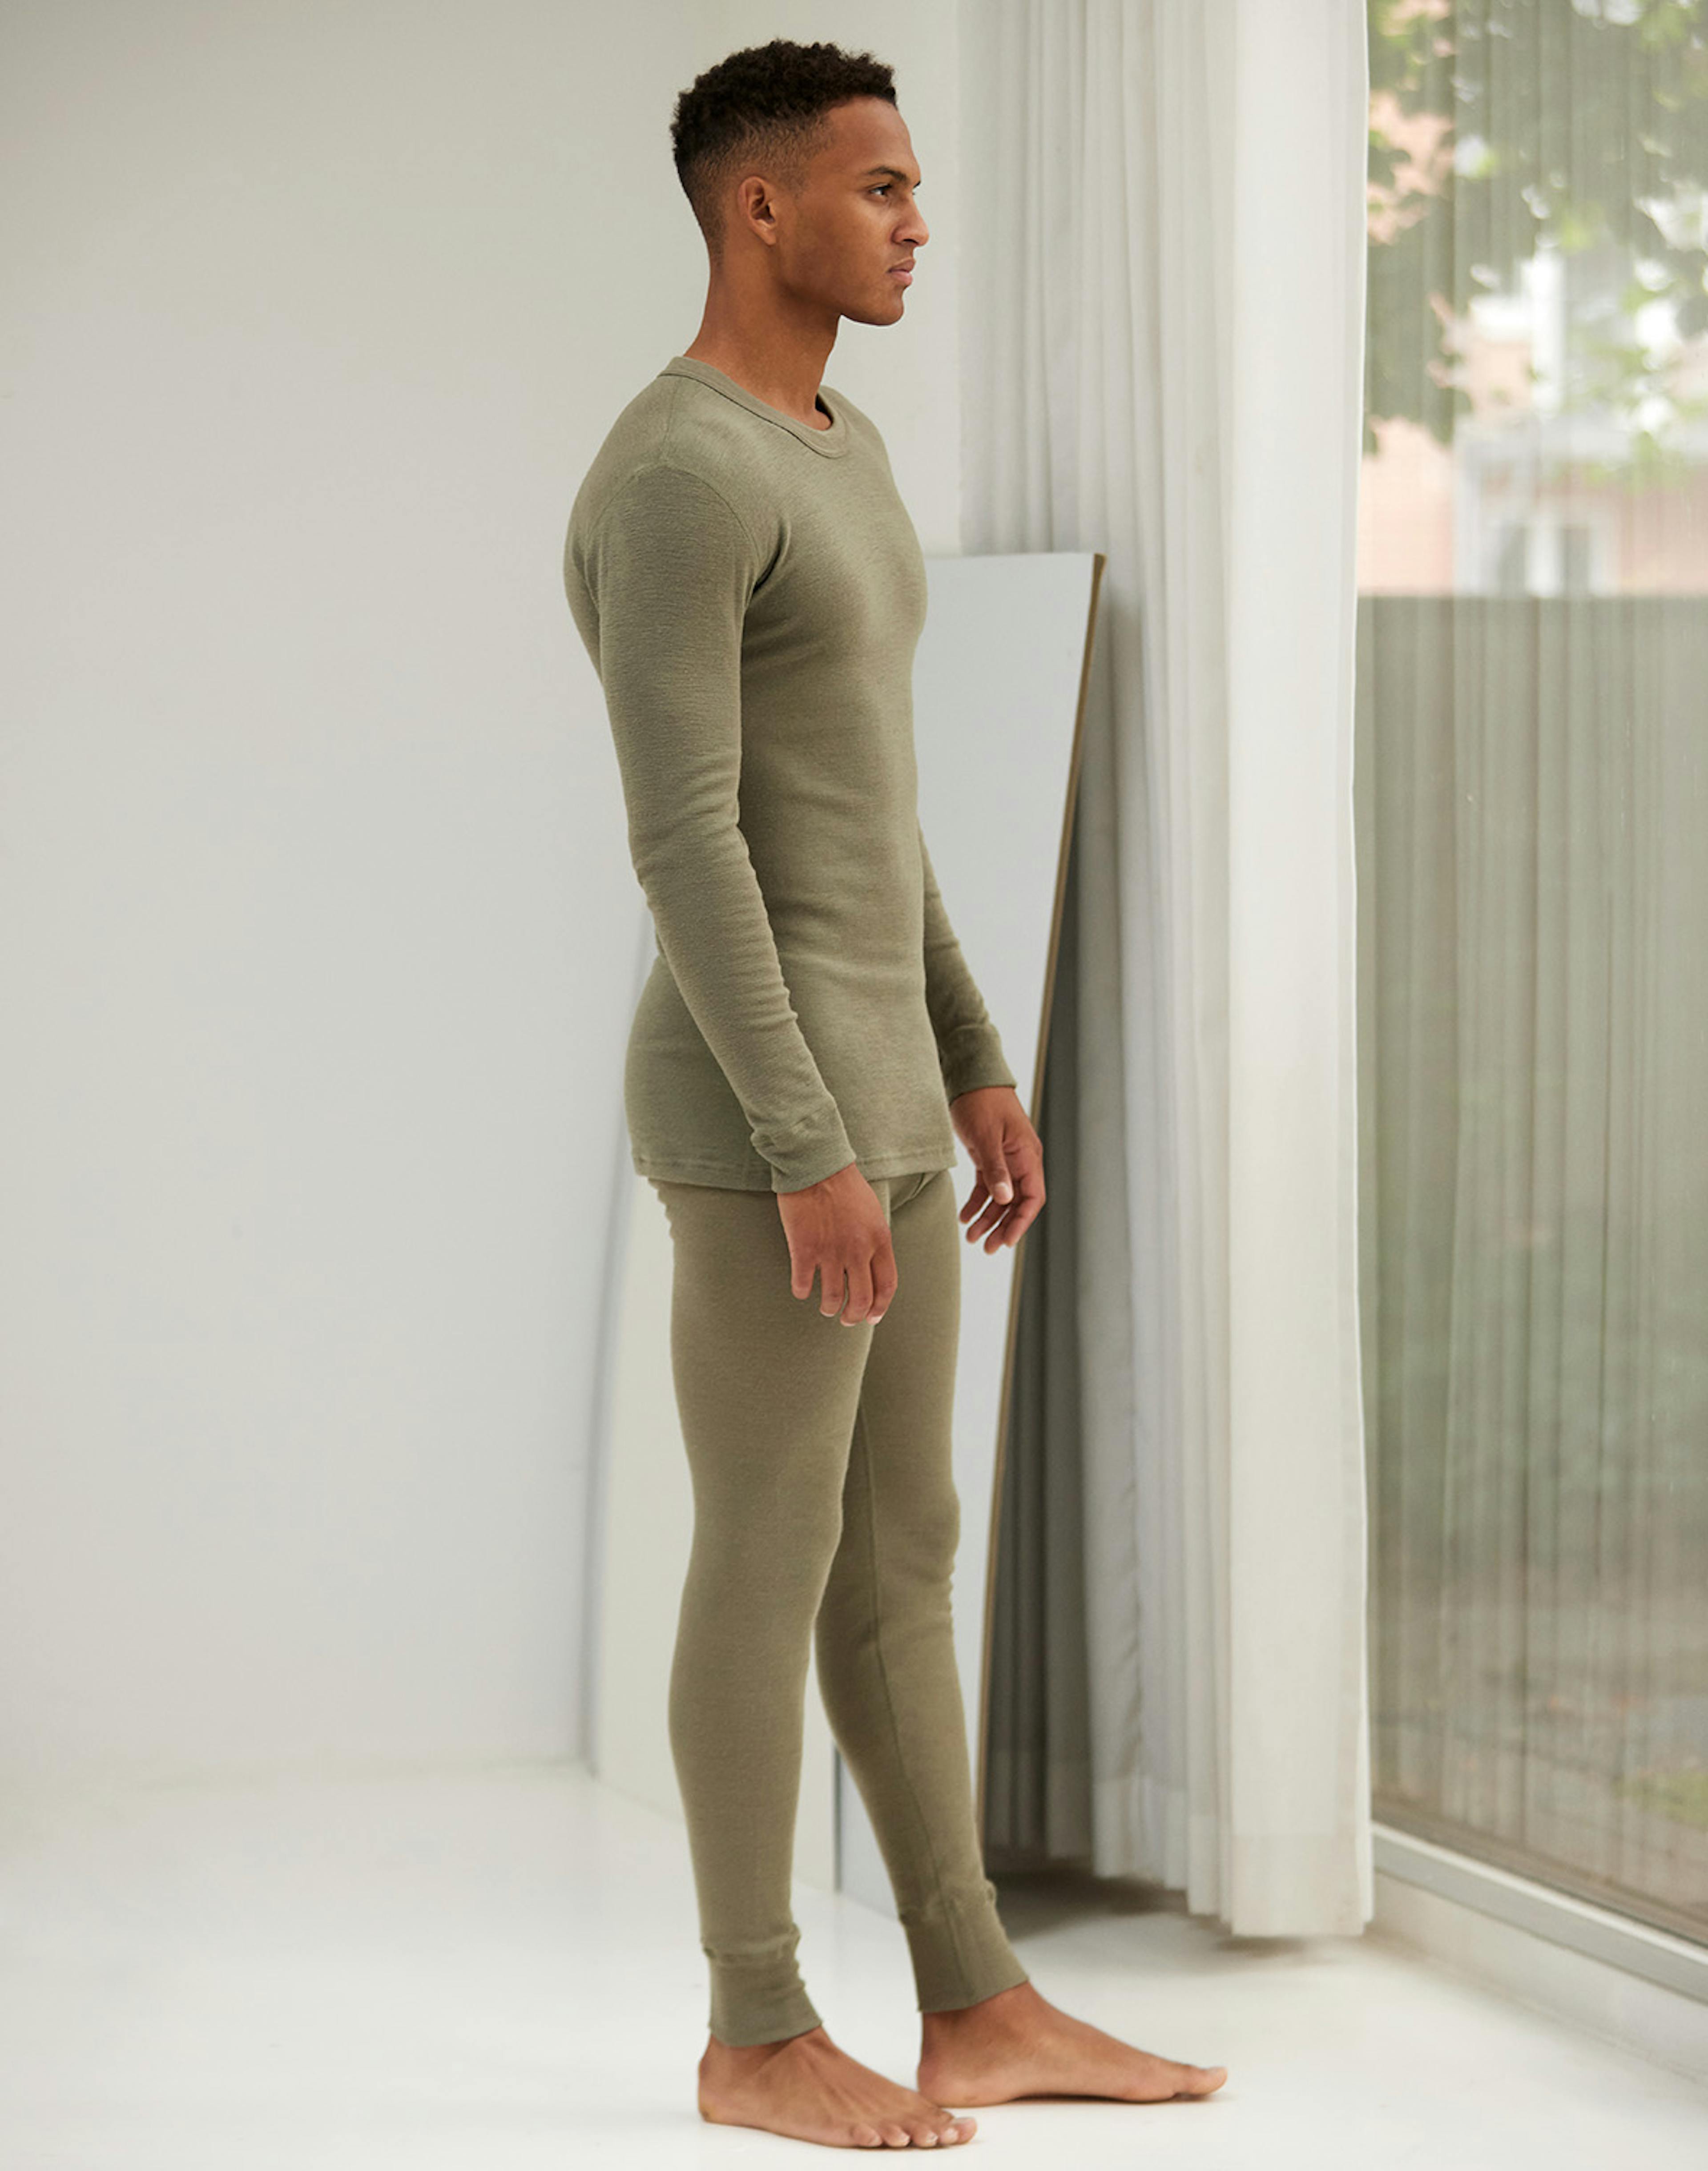 Merino Wool Long Sleeve Thermal Tops & Base Layers